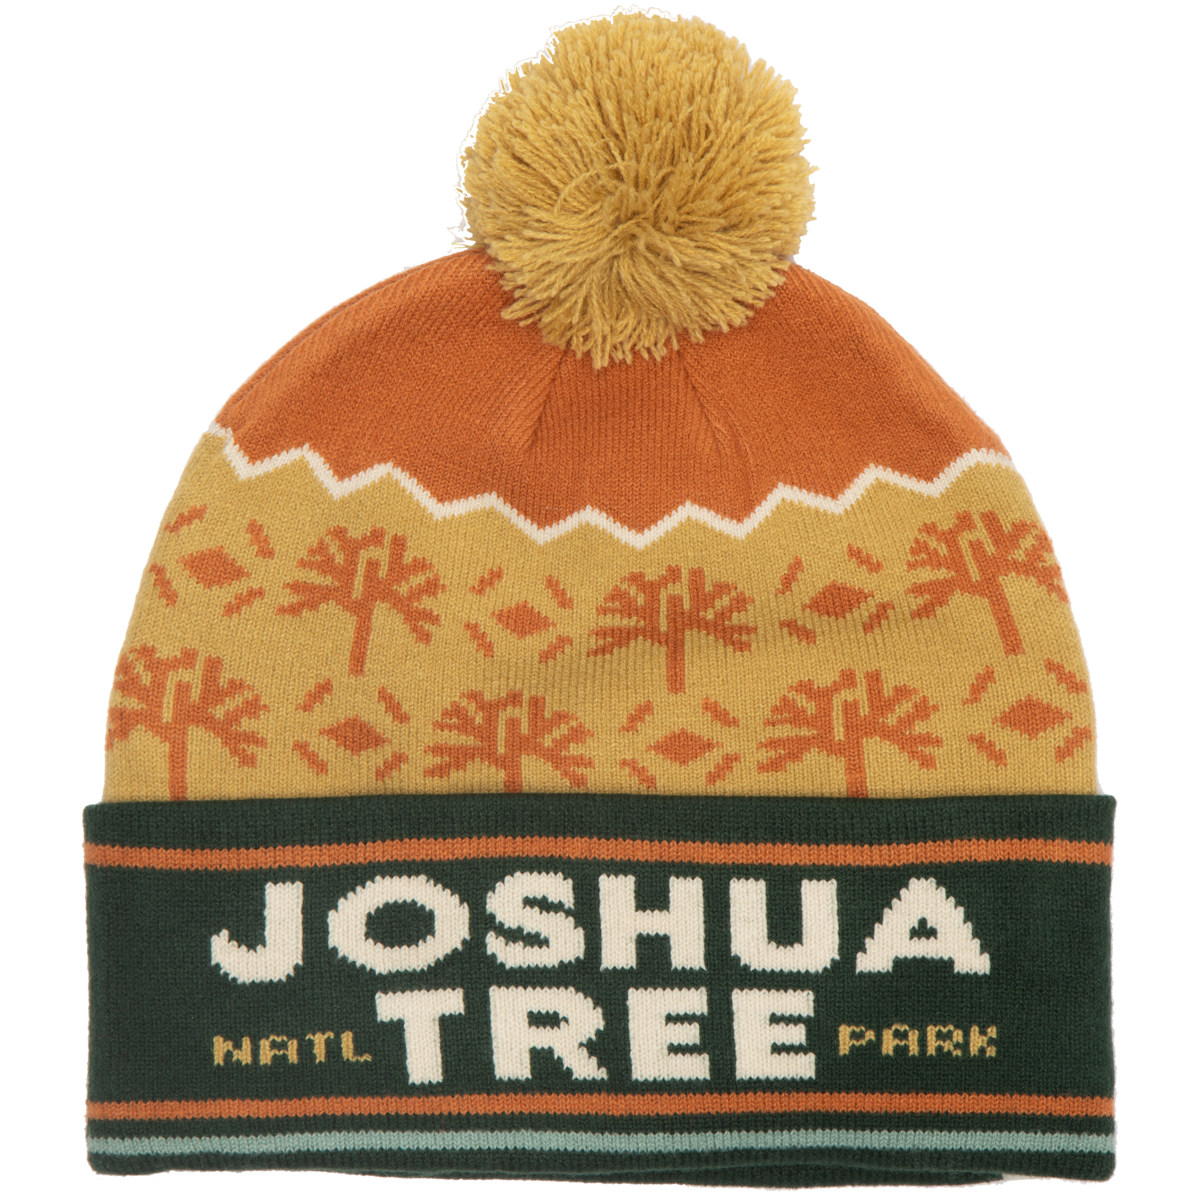 Joshua Tree National Park Beanie - Nubian Lane Hat Co. 